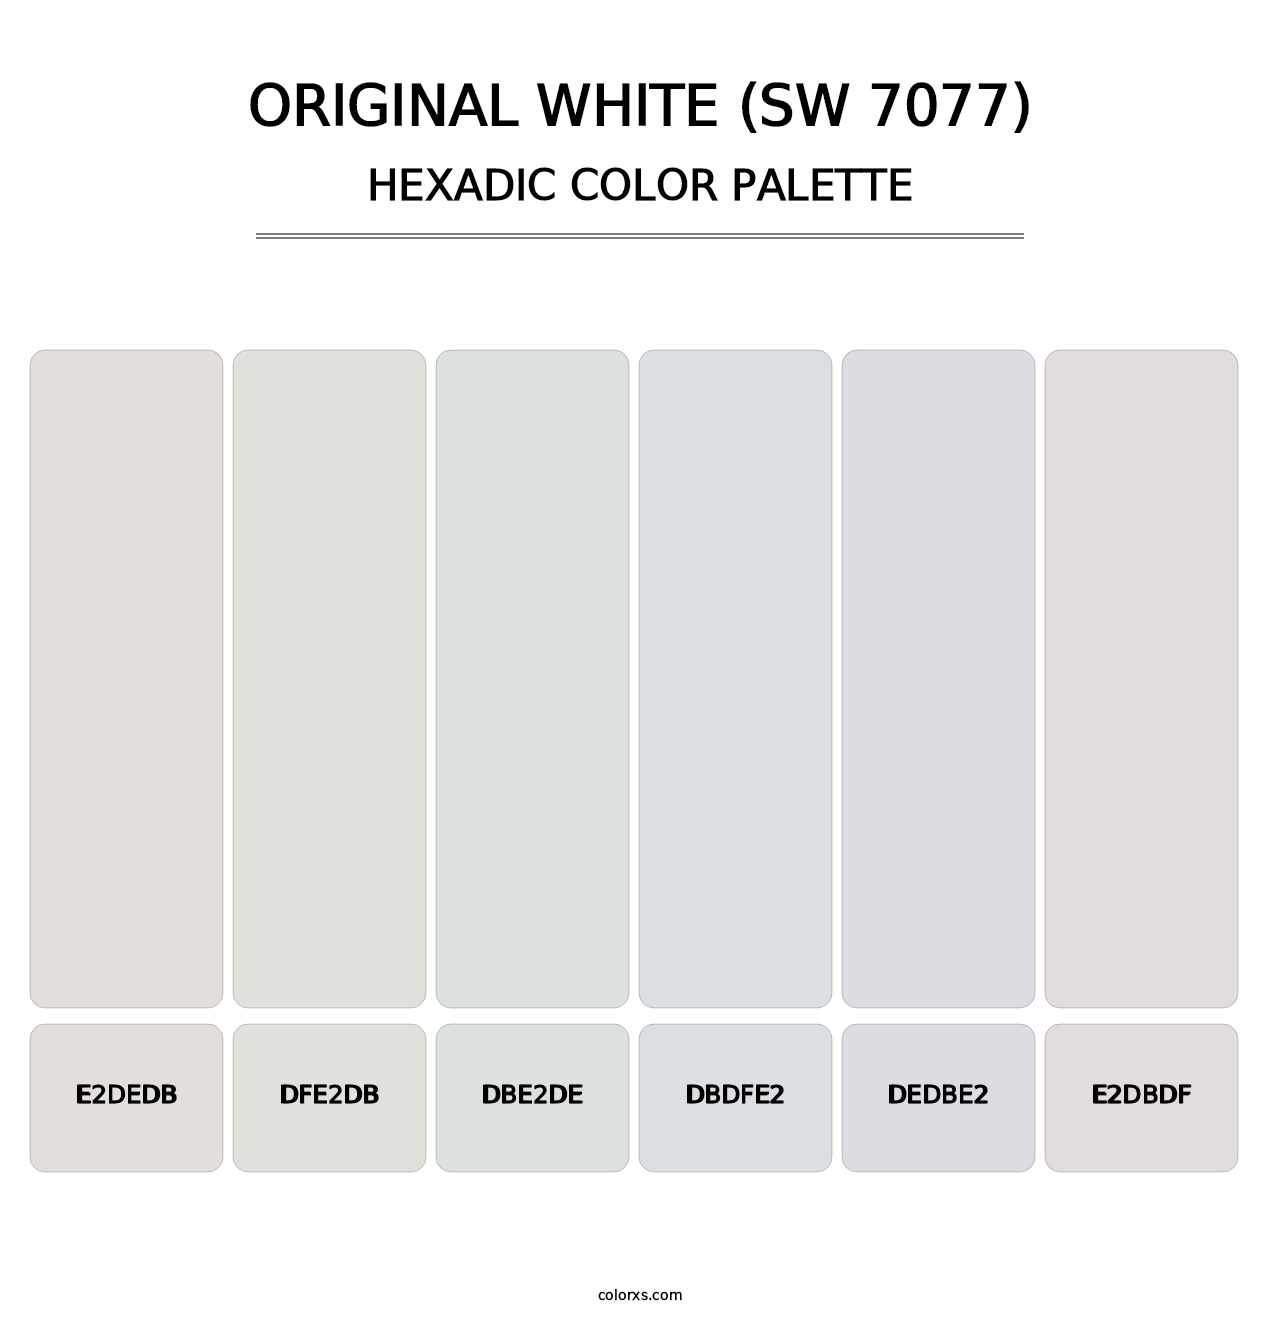 Original White (SW 7077) - Hexadic Color Palette